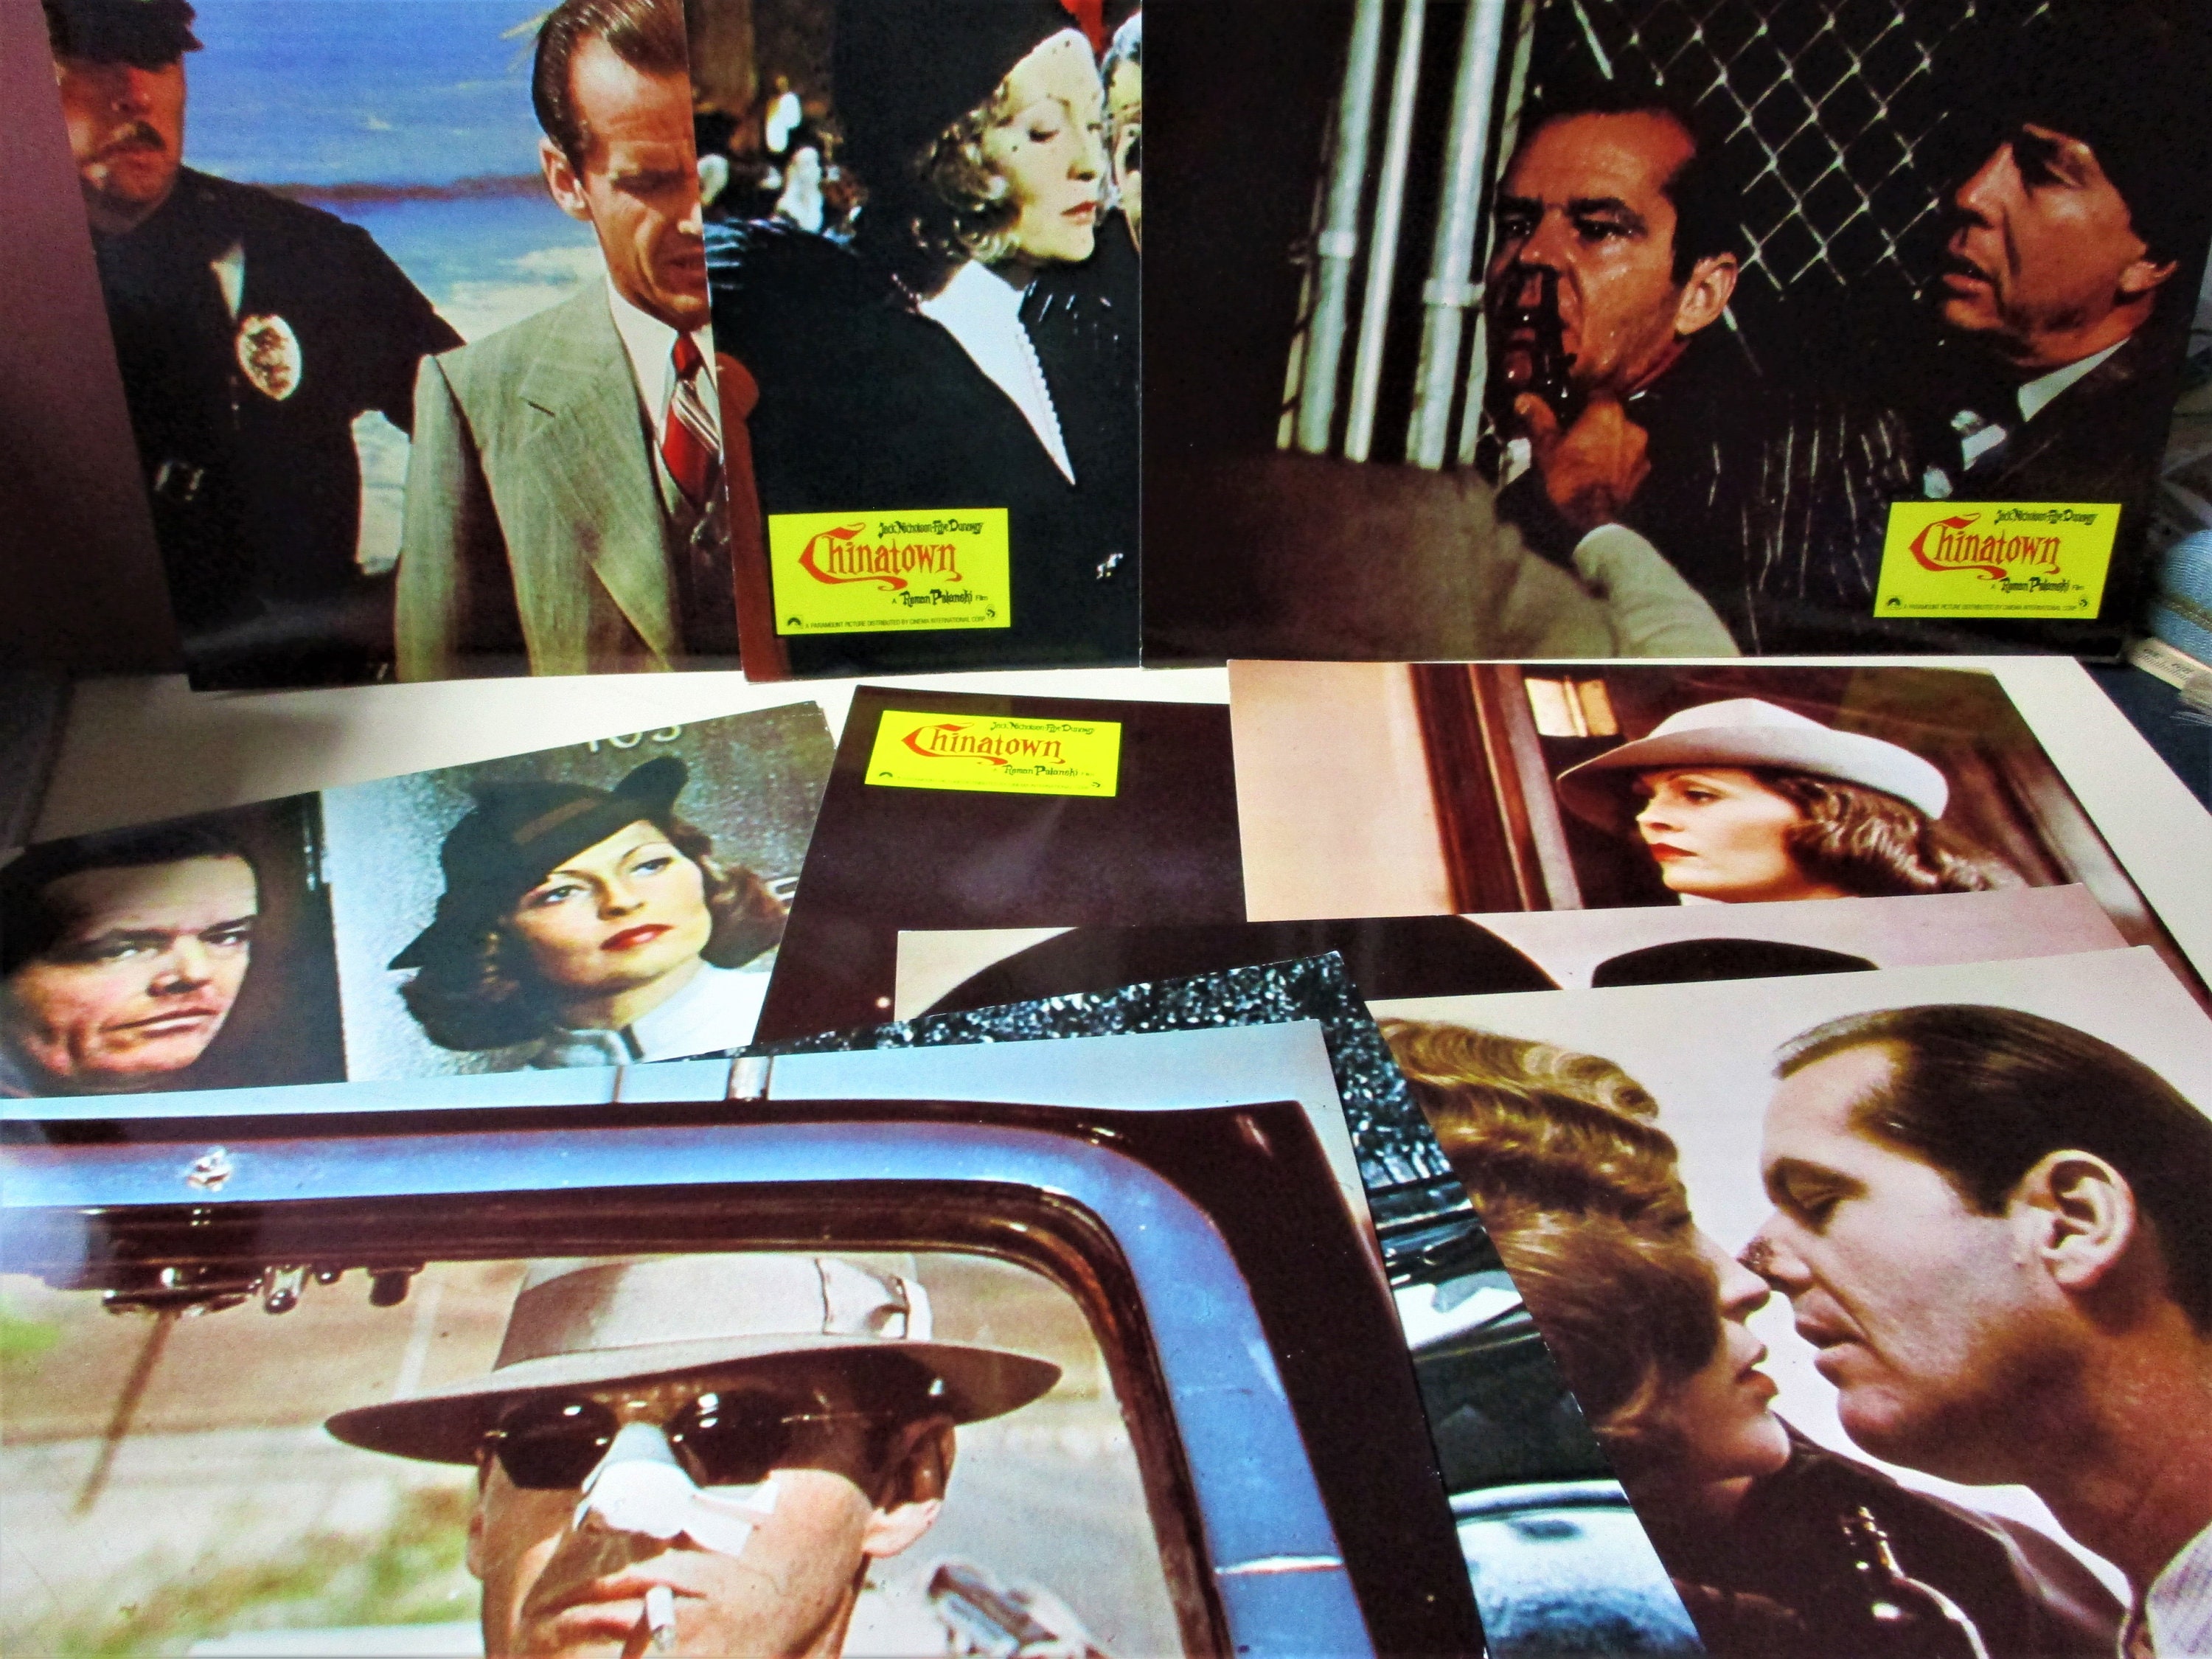 1974 CHINATOWN, Lot of 11 Original International Lobby Card 9x12 Movie Posters, Jack Nicholson, Faye Dunaway, Man Cave,  Los Angeles Noir